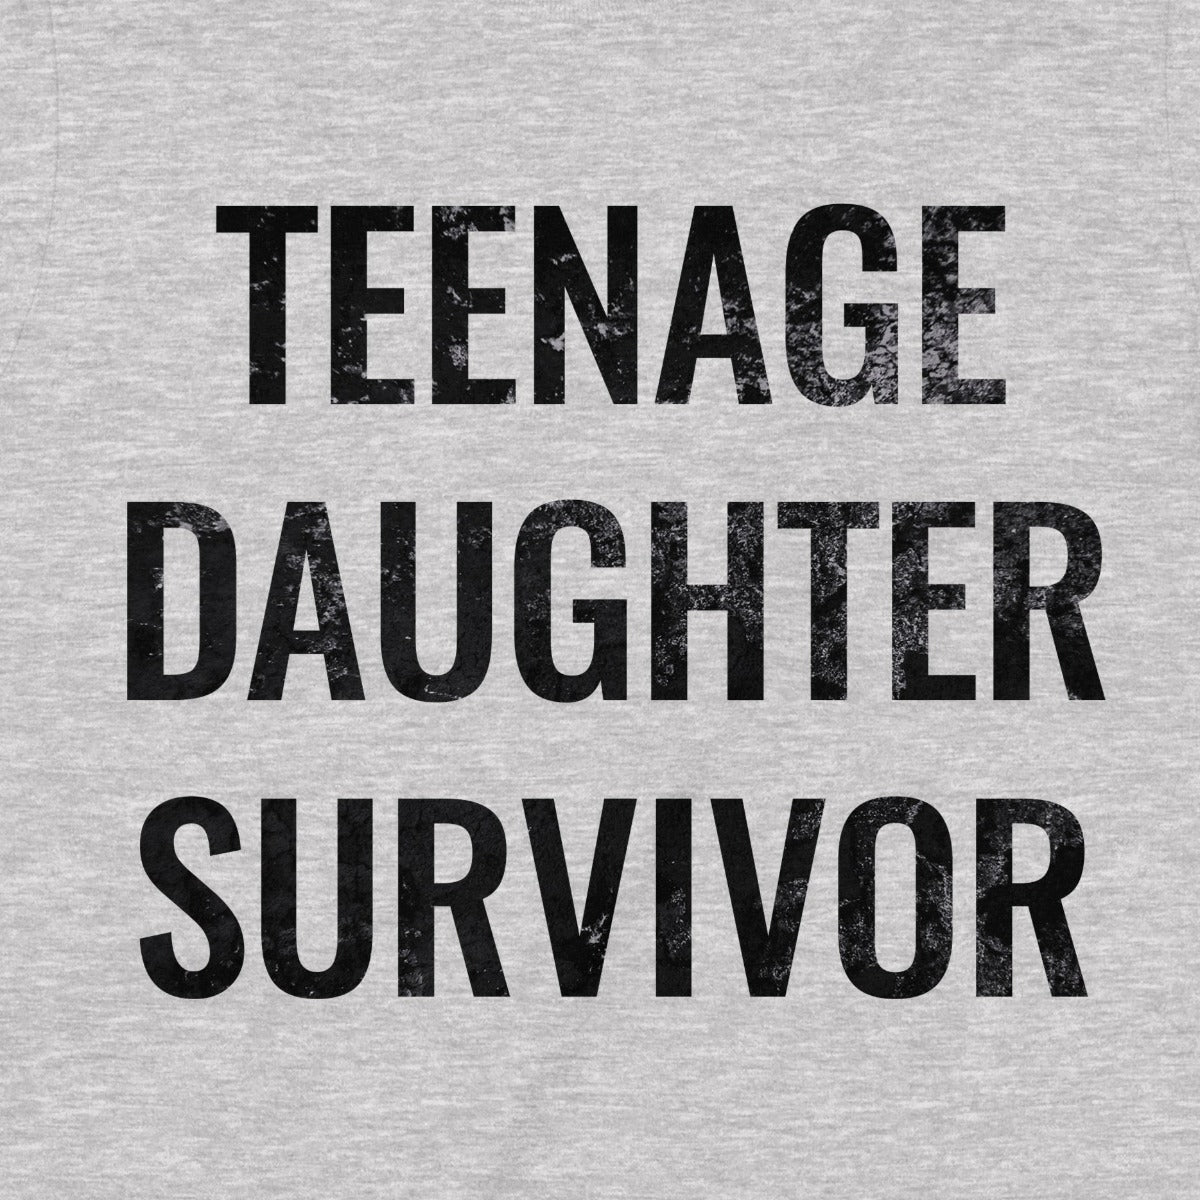 "Teenage Daughter Surviver" Premium Midweight Ringspun Cotton T-Shirt - Mens/Womens Fits